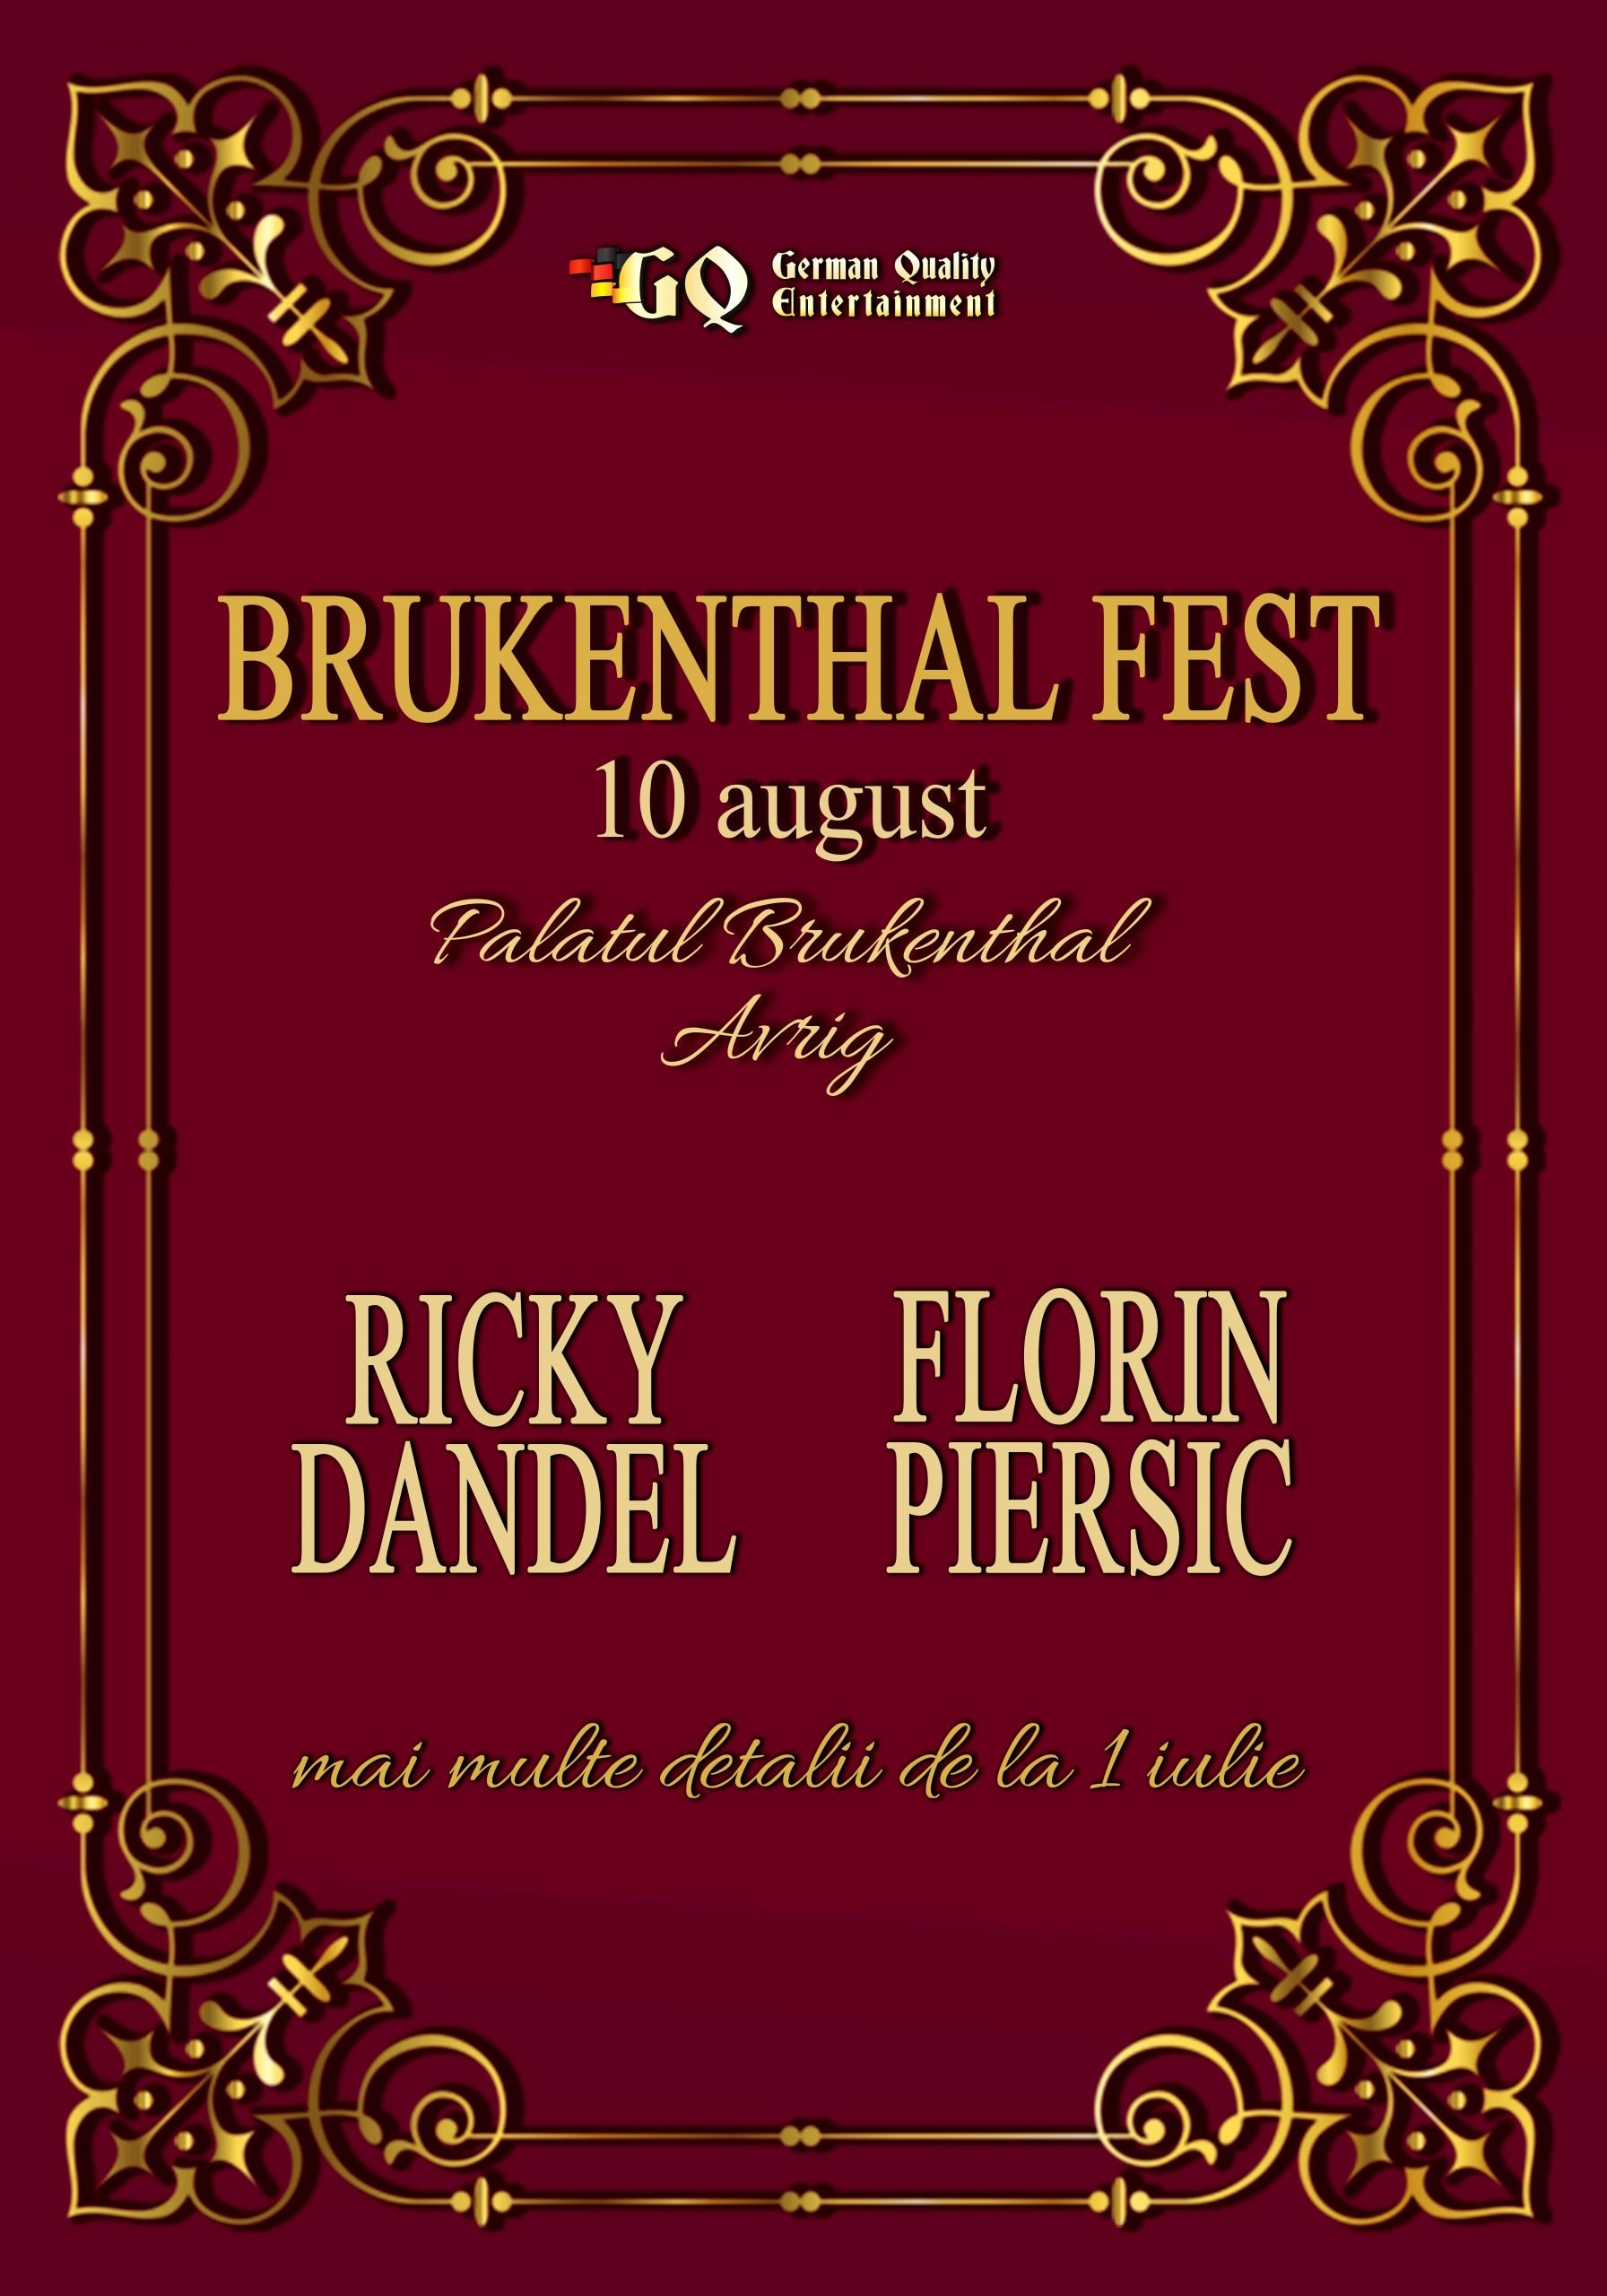 Brukenthal Fest, ediția I: Ricky Dandel & Florin Piersic